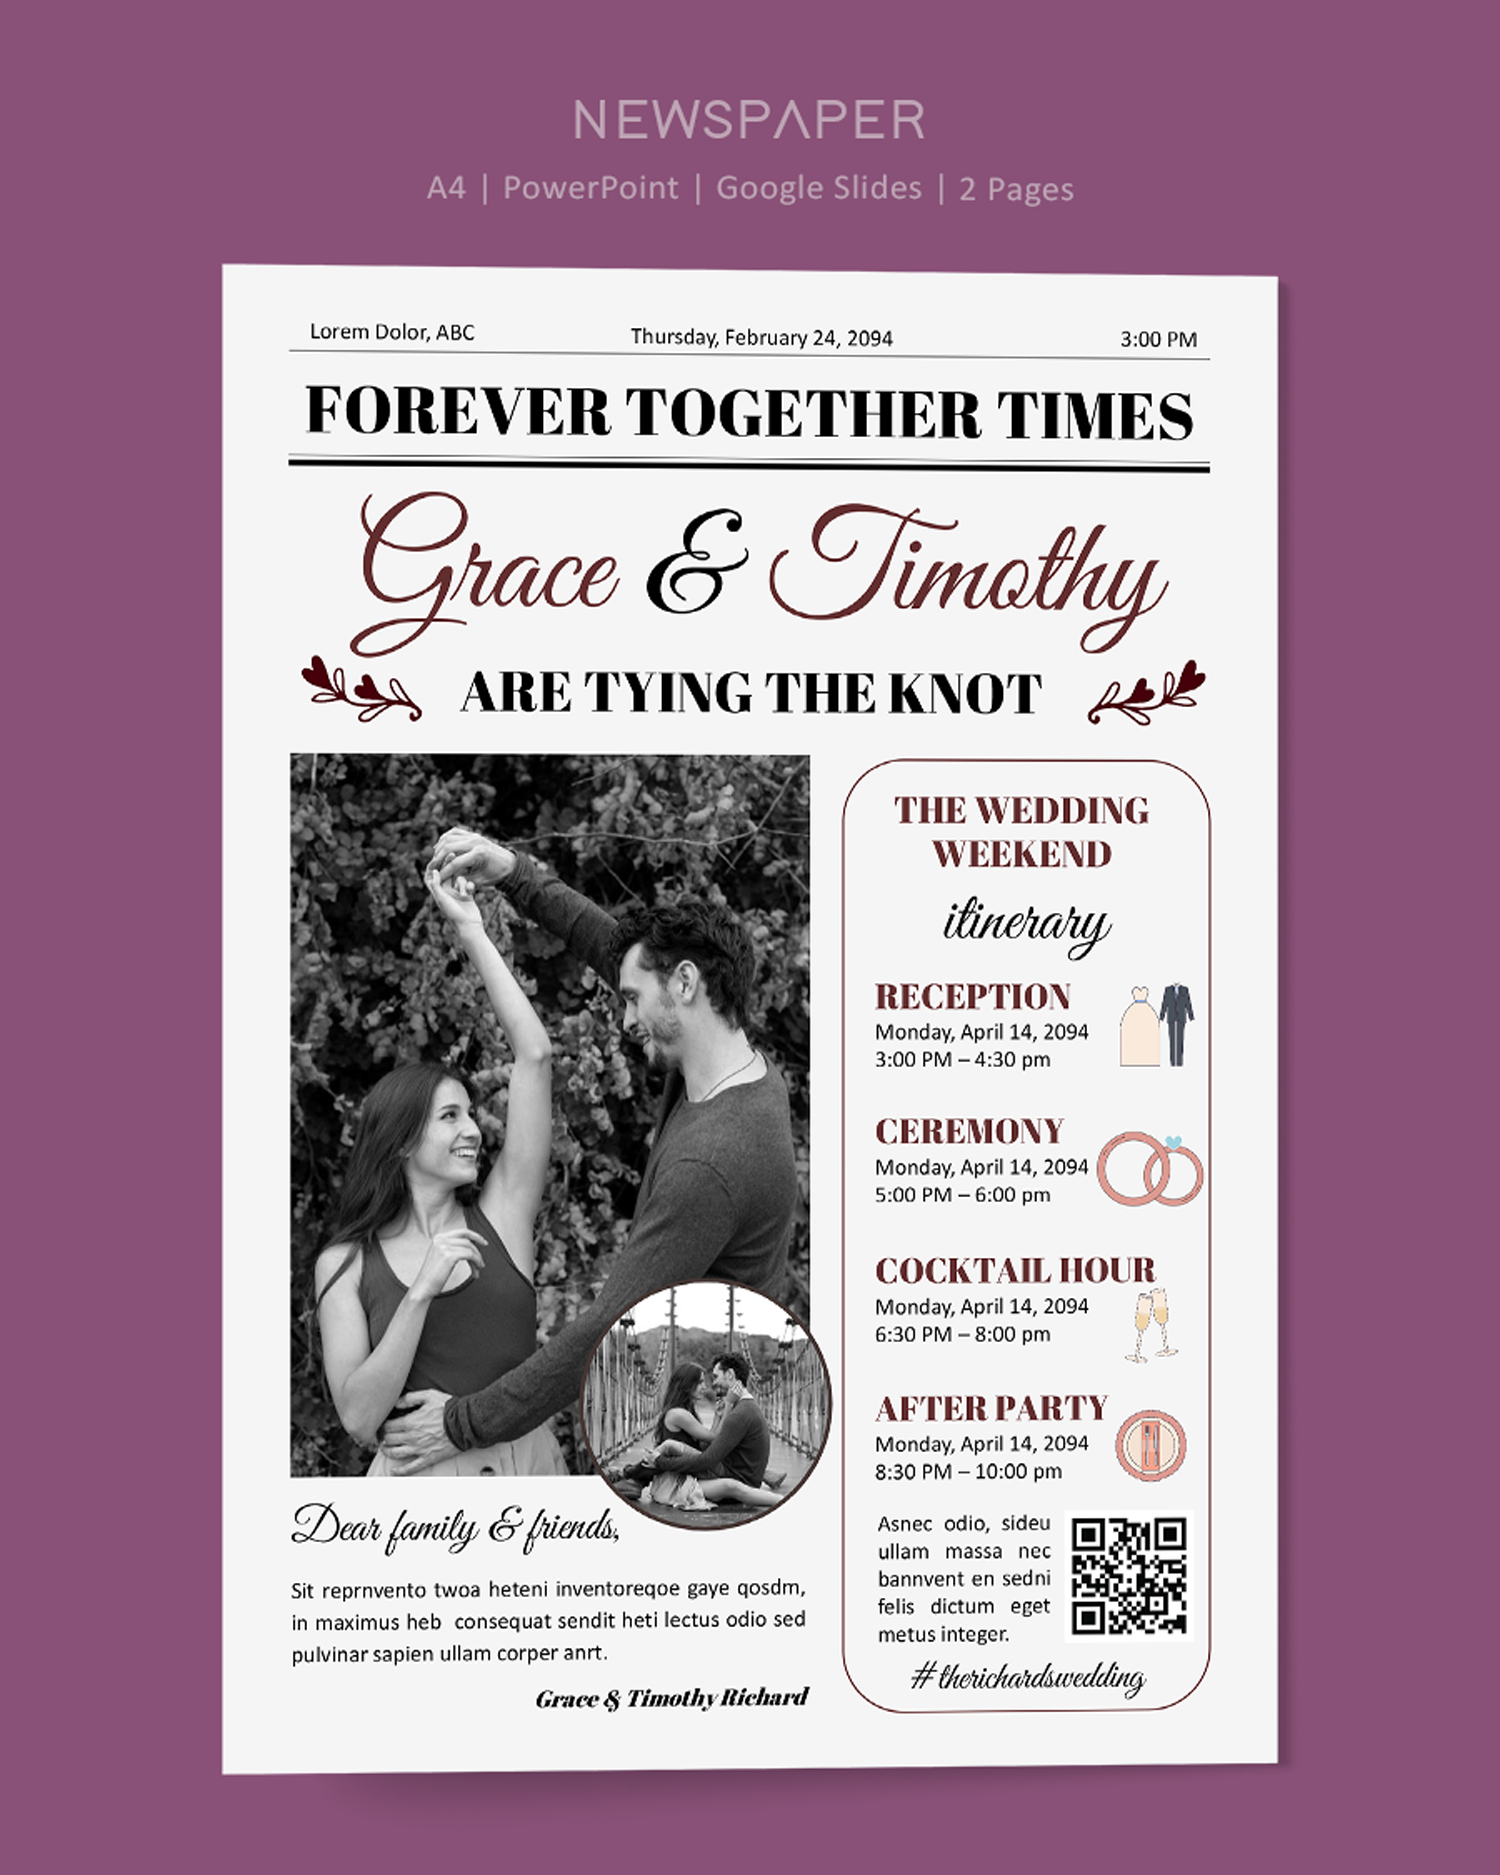 Minimal Black and White Wedding Newspaper Template - PowerPoint, Google Slides